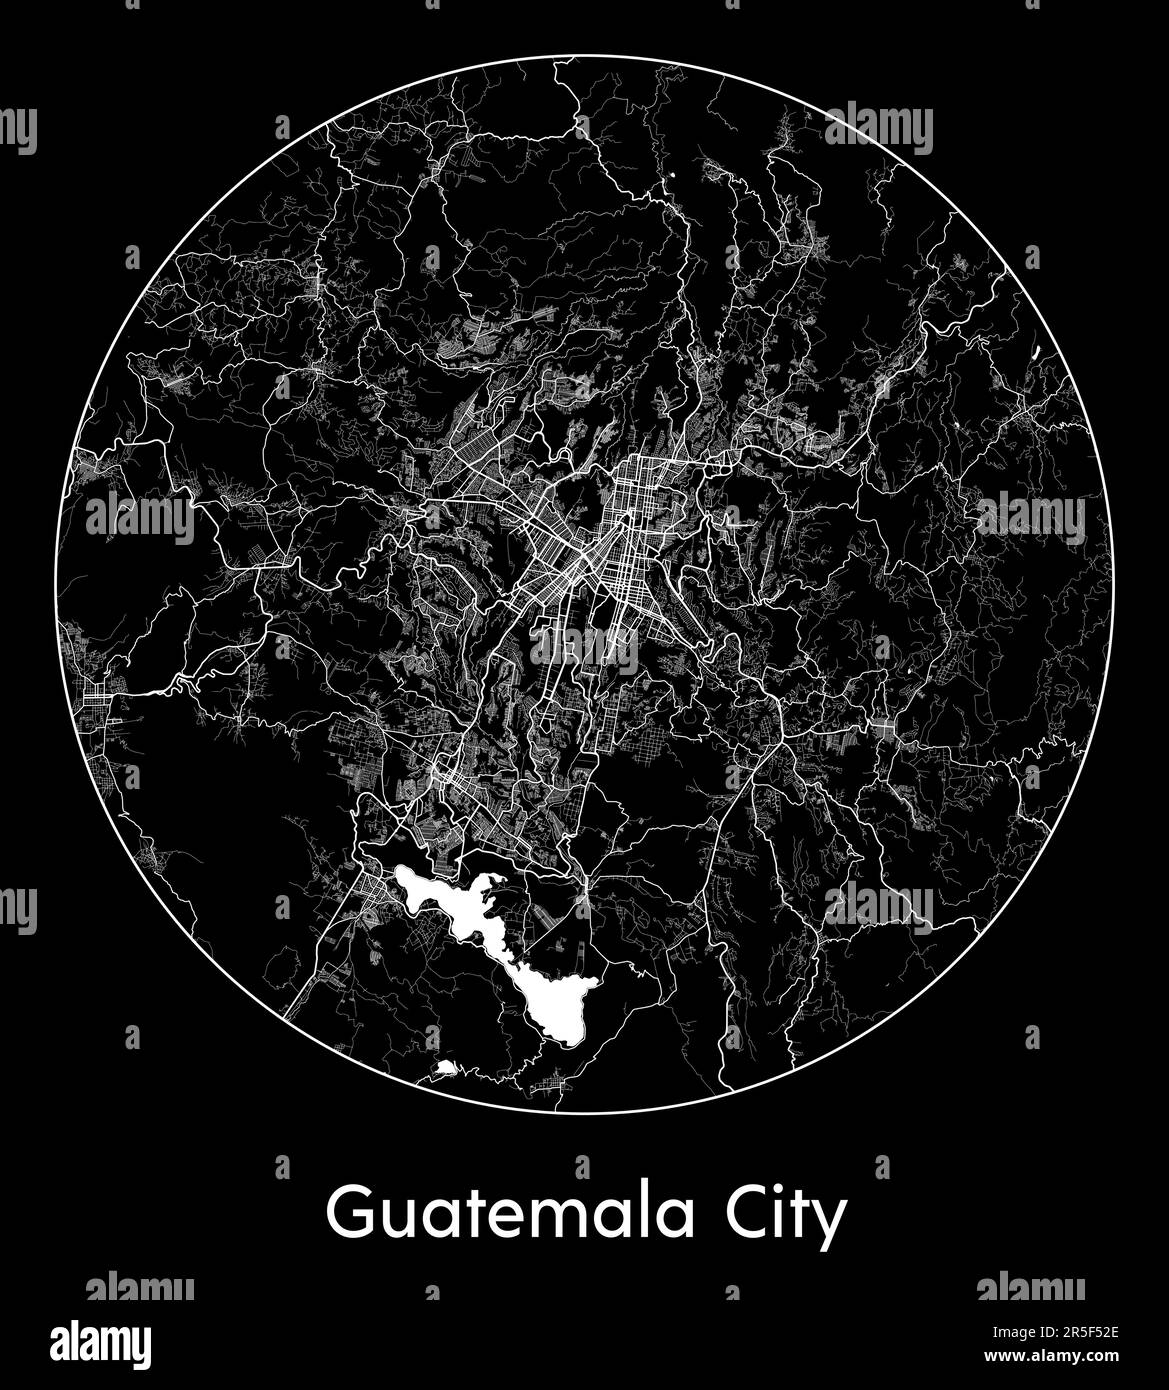 City Map Guatemala City Guatemala North America vector illustration Stock Vector